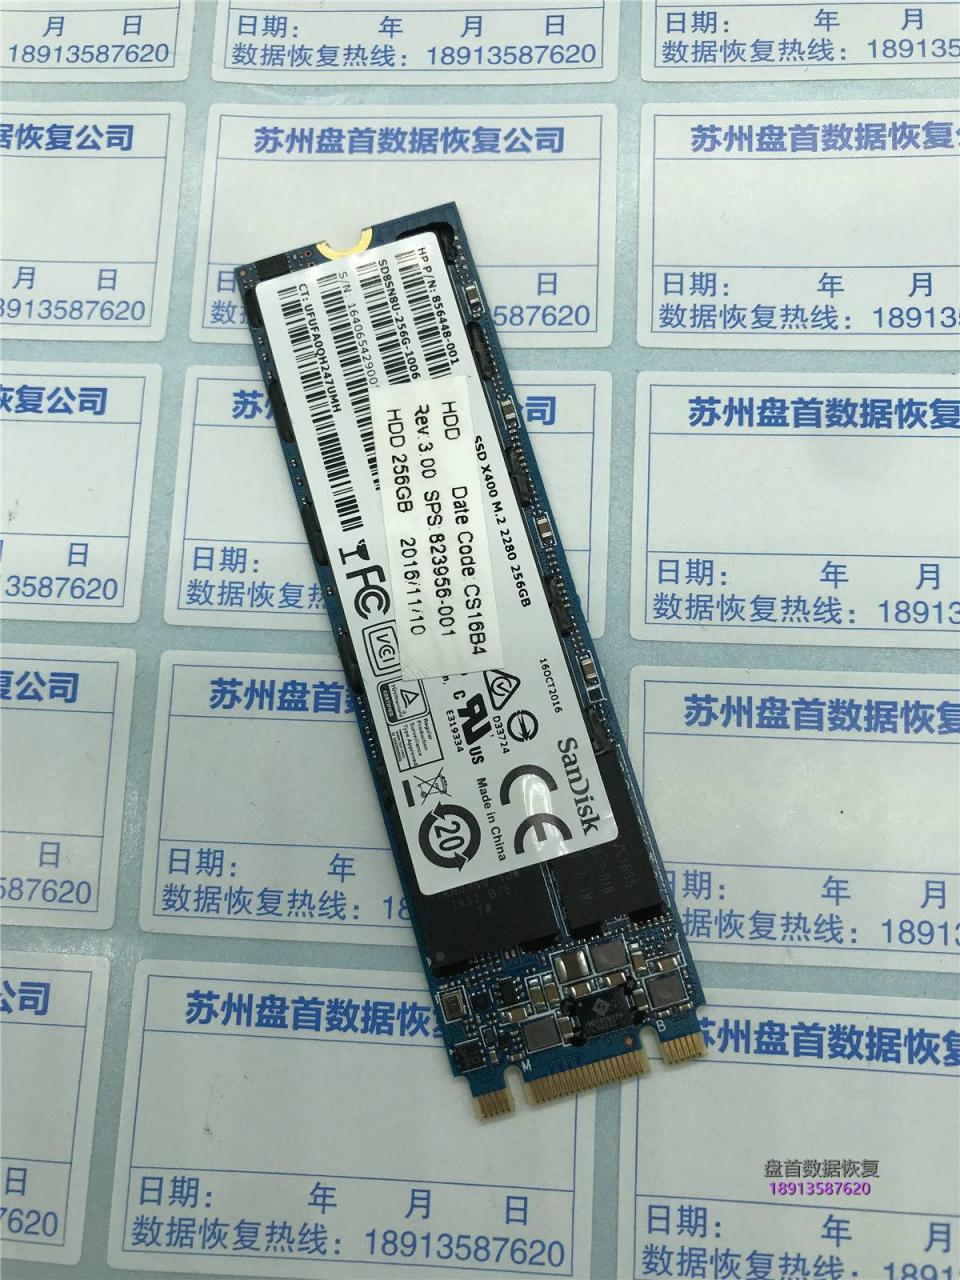 SanDisk X400 SD8SN8U固态硬盘损坏导致无法输入Bitlocker密码进行解密数据恢复成功